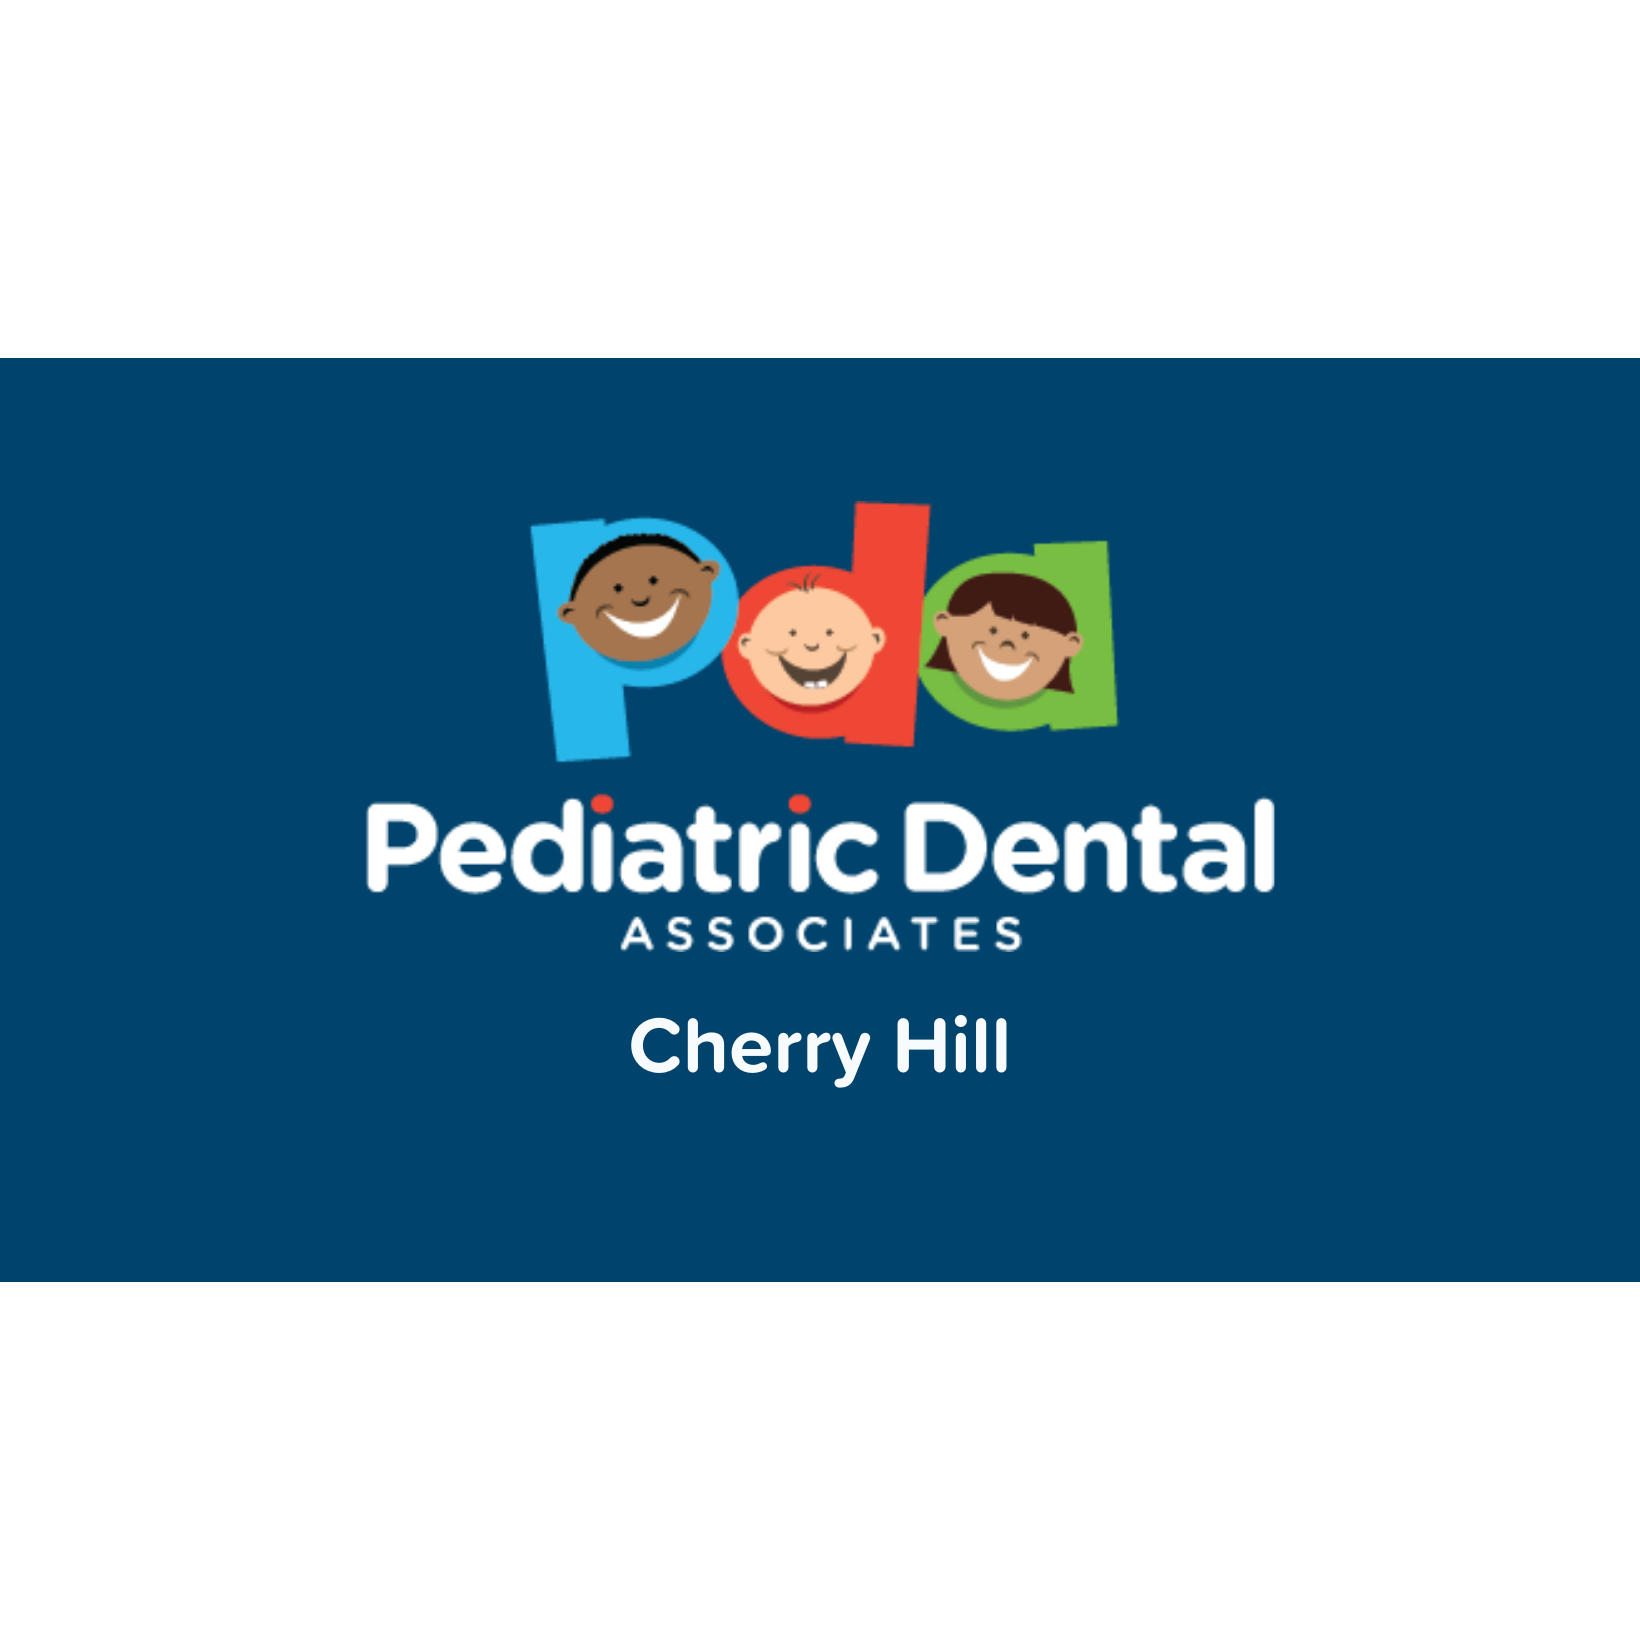 Pediatric Dental Associates of Cherry Hill